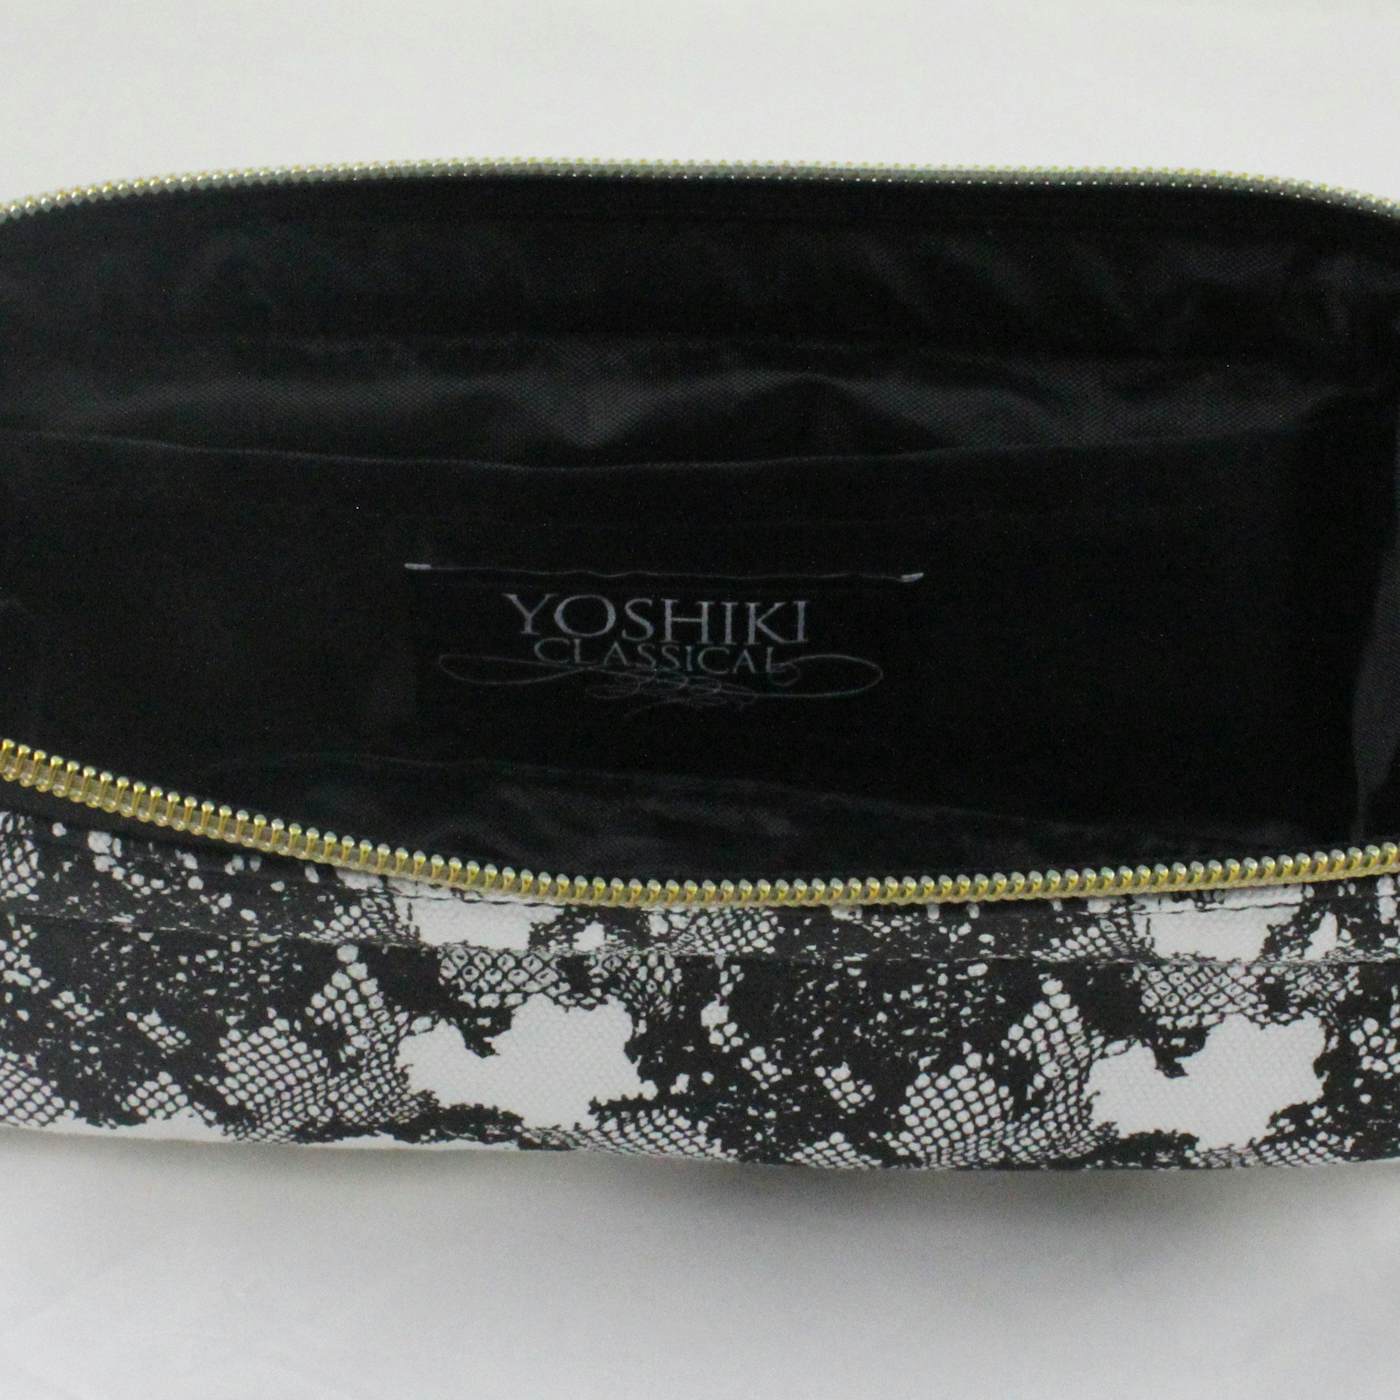 Yoshiki Classical Makeup Bag